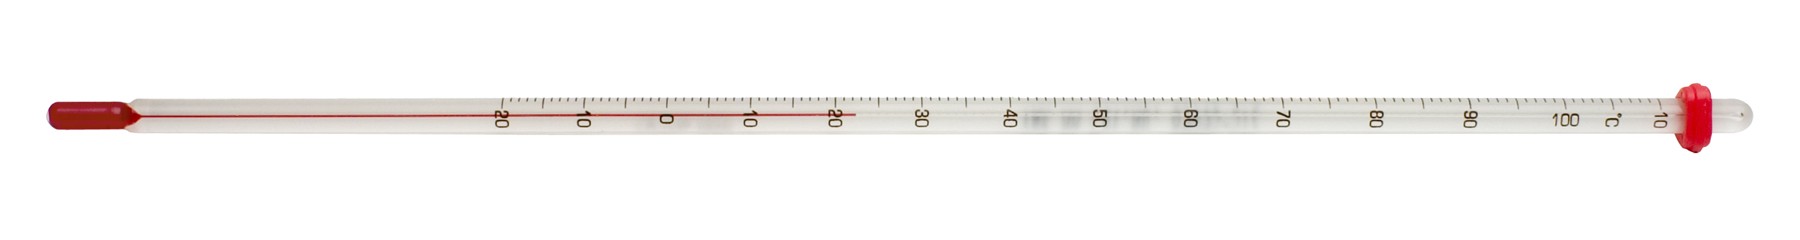 SP Bel-Art, H-B DURAC General Purpose Liquid-In-Glass Laboratory Thermometer; -35 to 50C, Total Immersion, Organic Liquid Fill